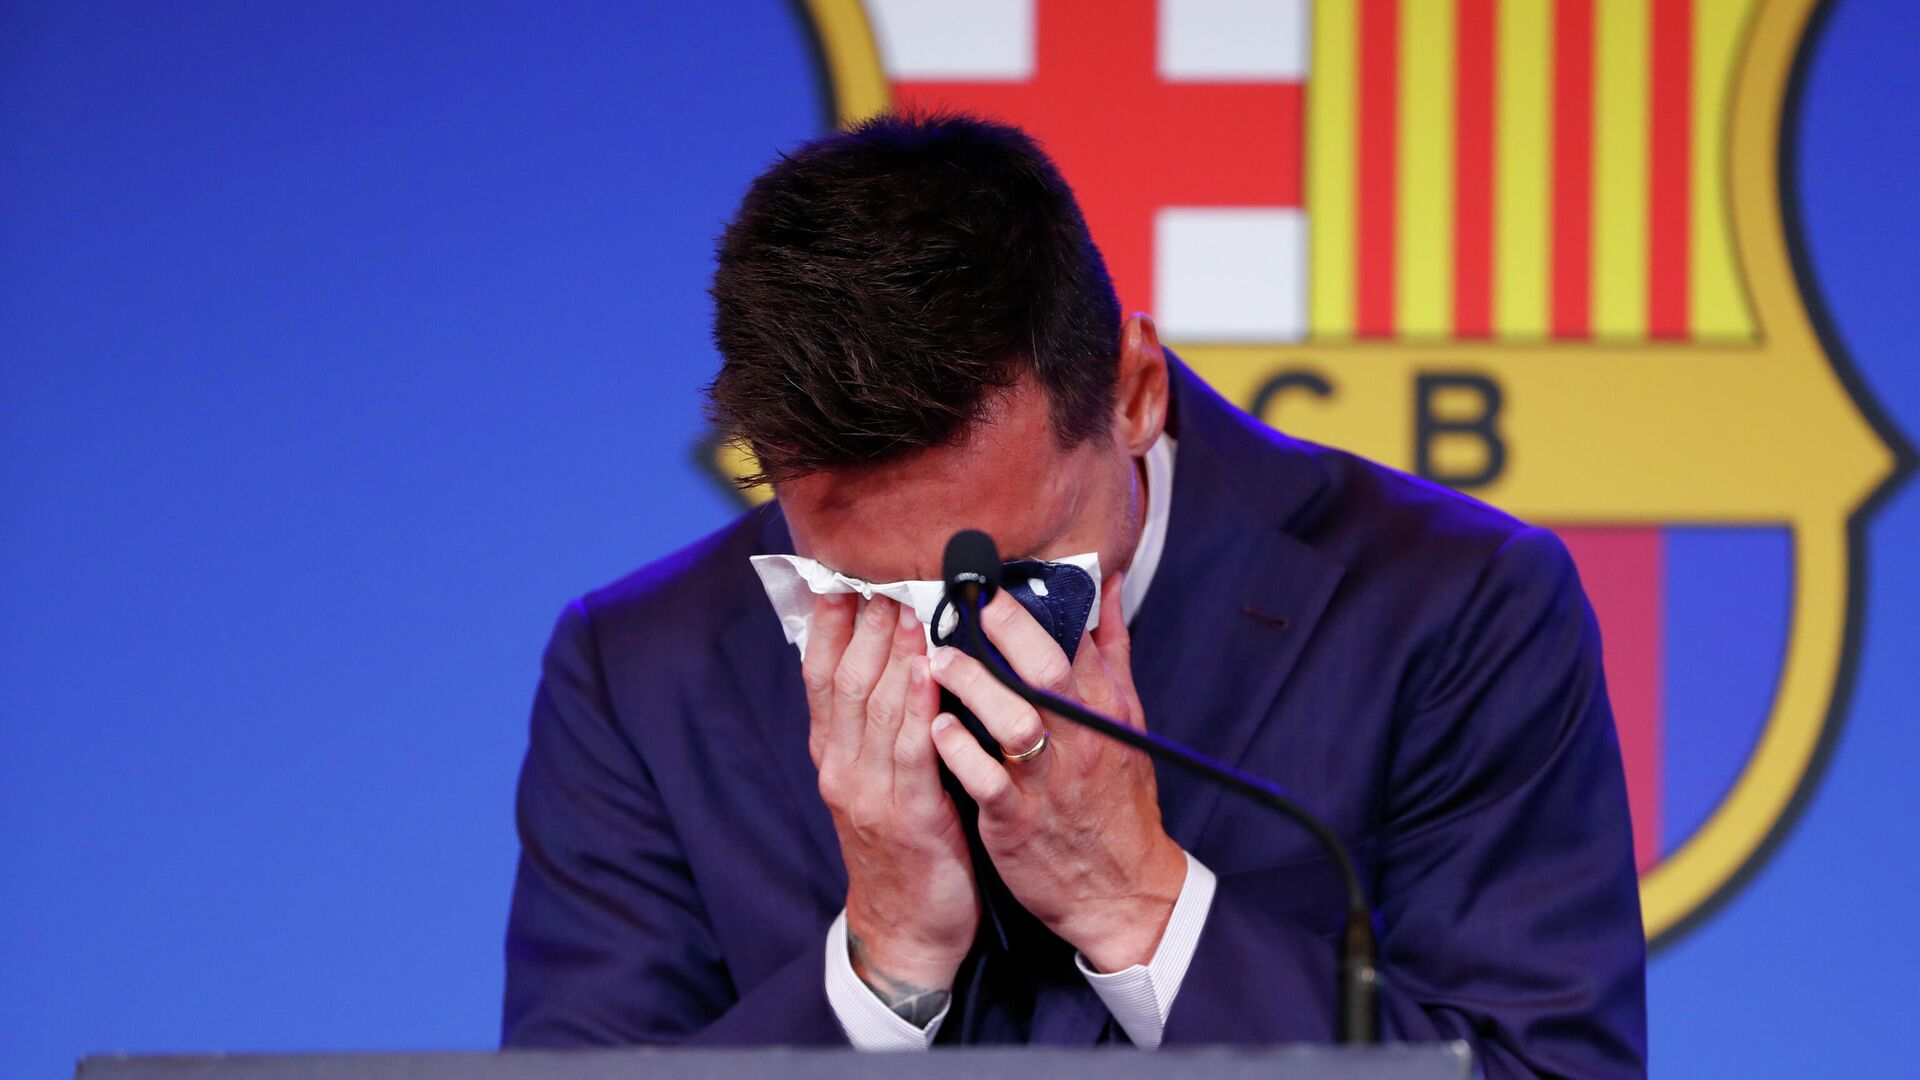 Аргентински фудбалер Лионел Меси плаче на опроштају од Барселоне - Sputnik Србија, 1920, 12.08.2021